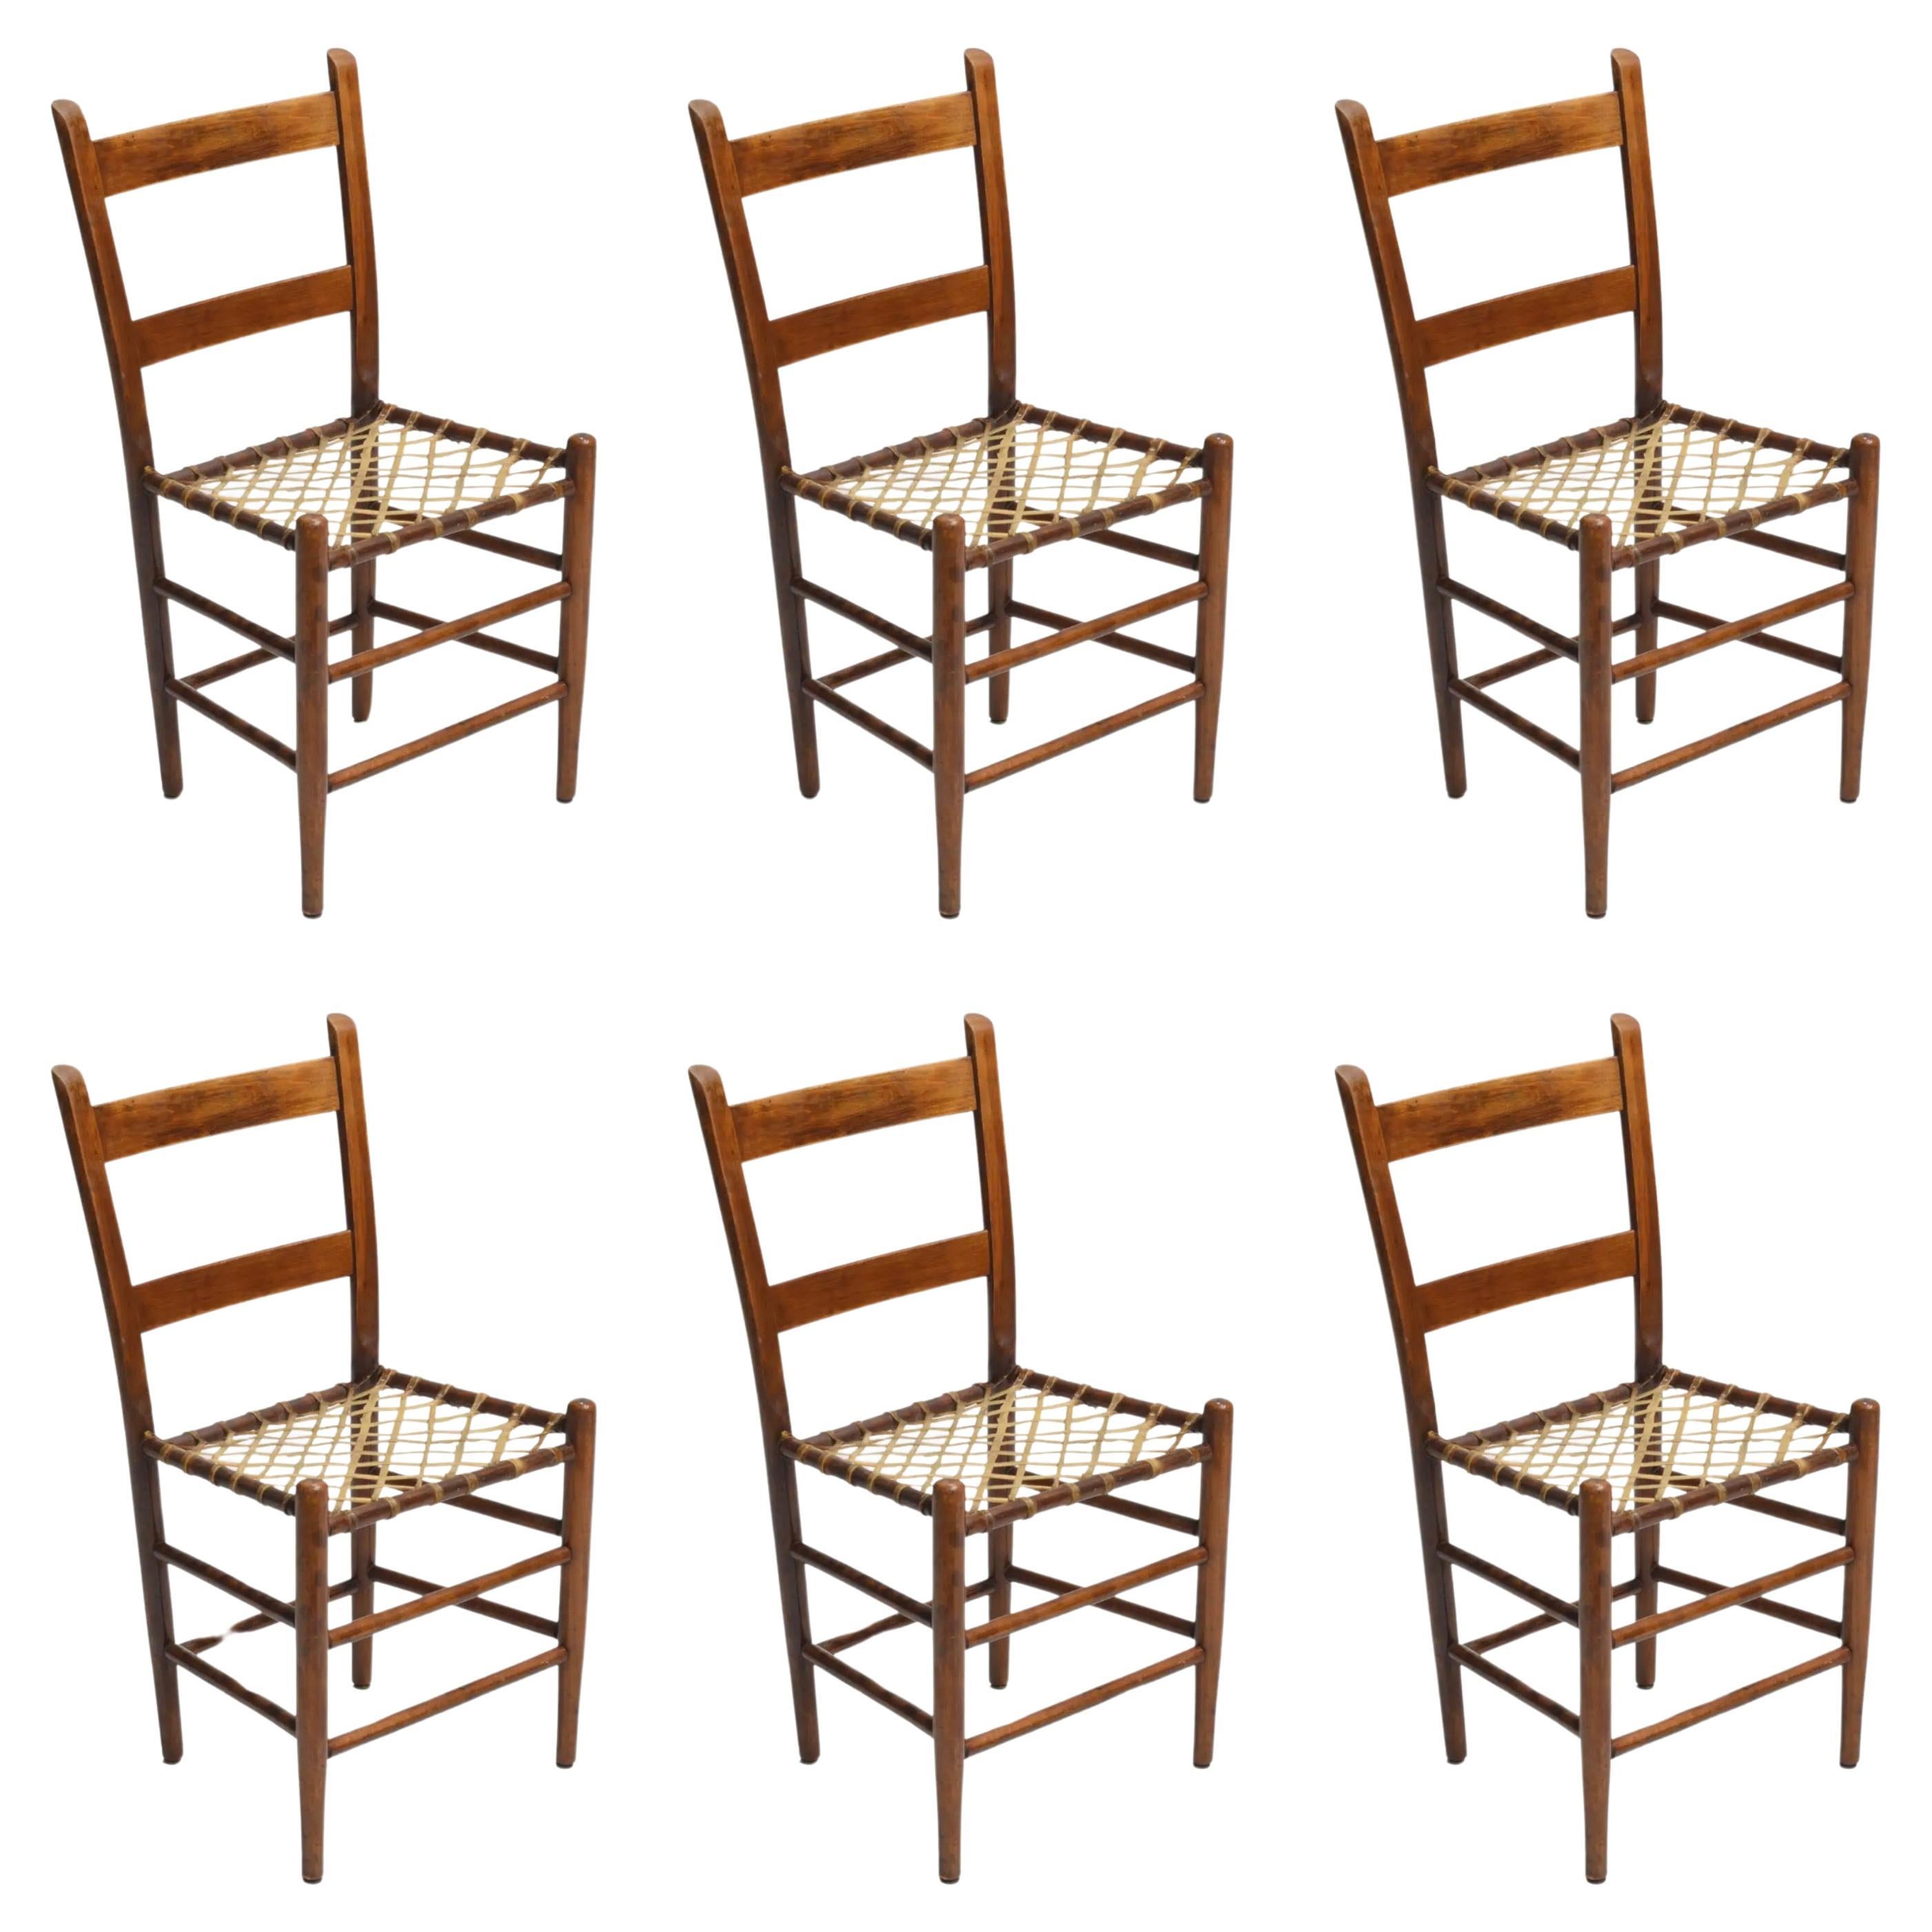 Primitive Stühle aus Rohleder des 19. Jahrhunderts, um 1850